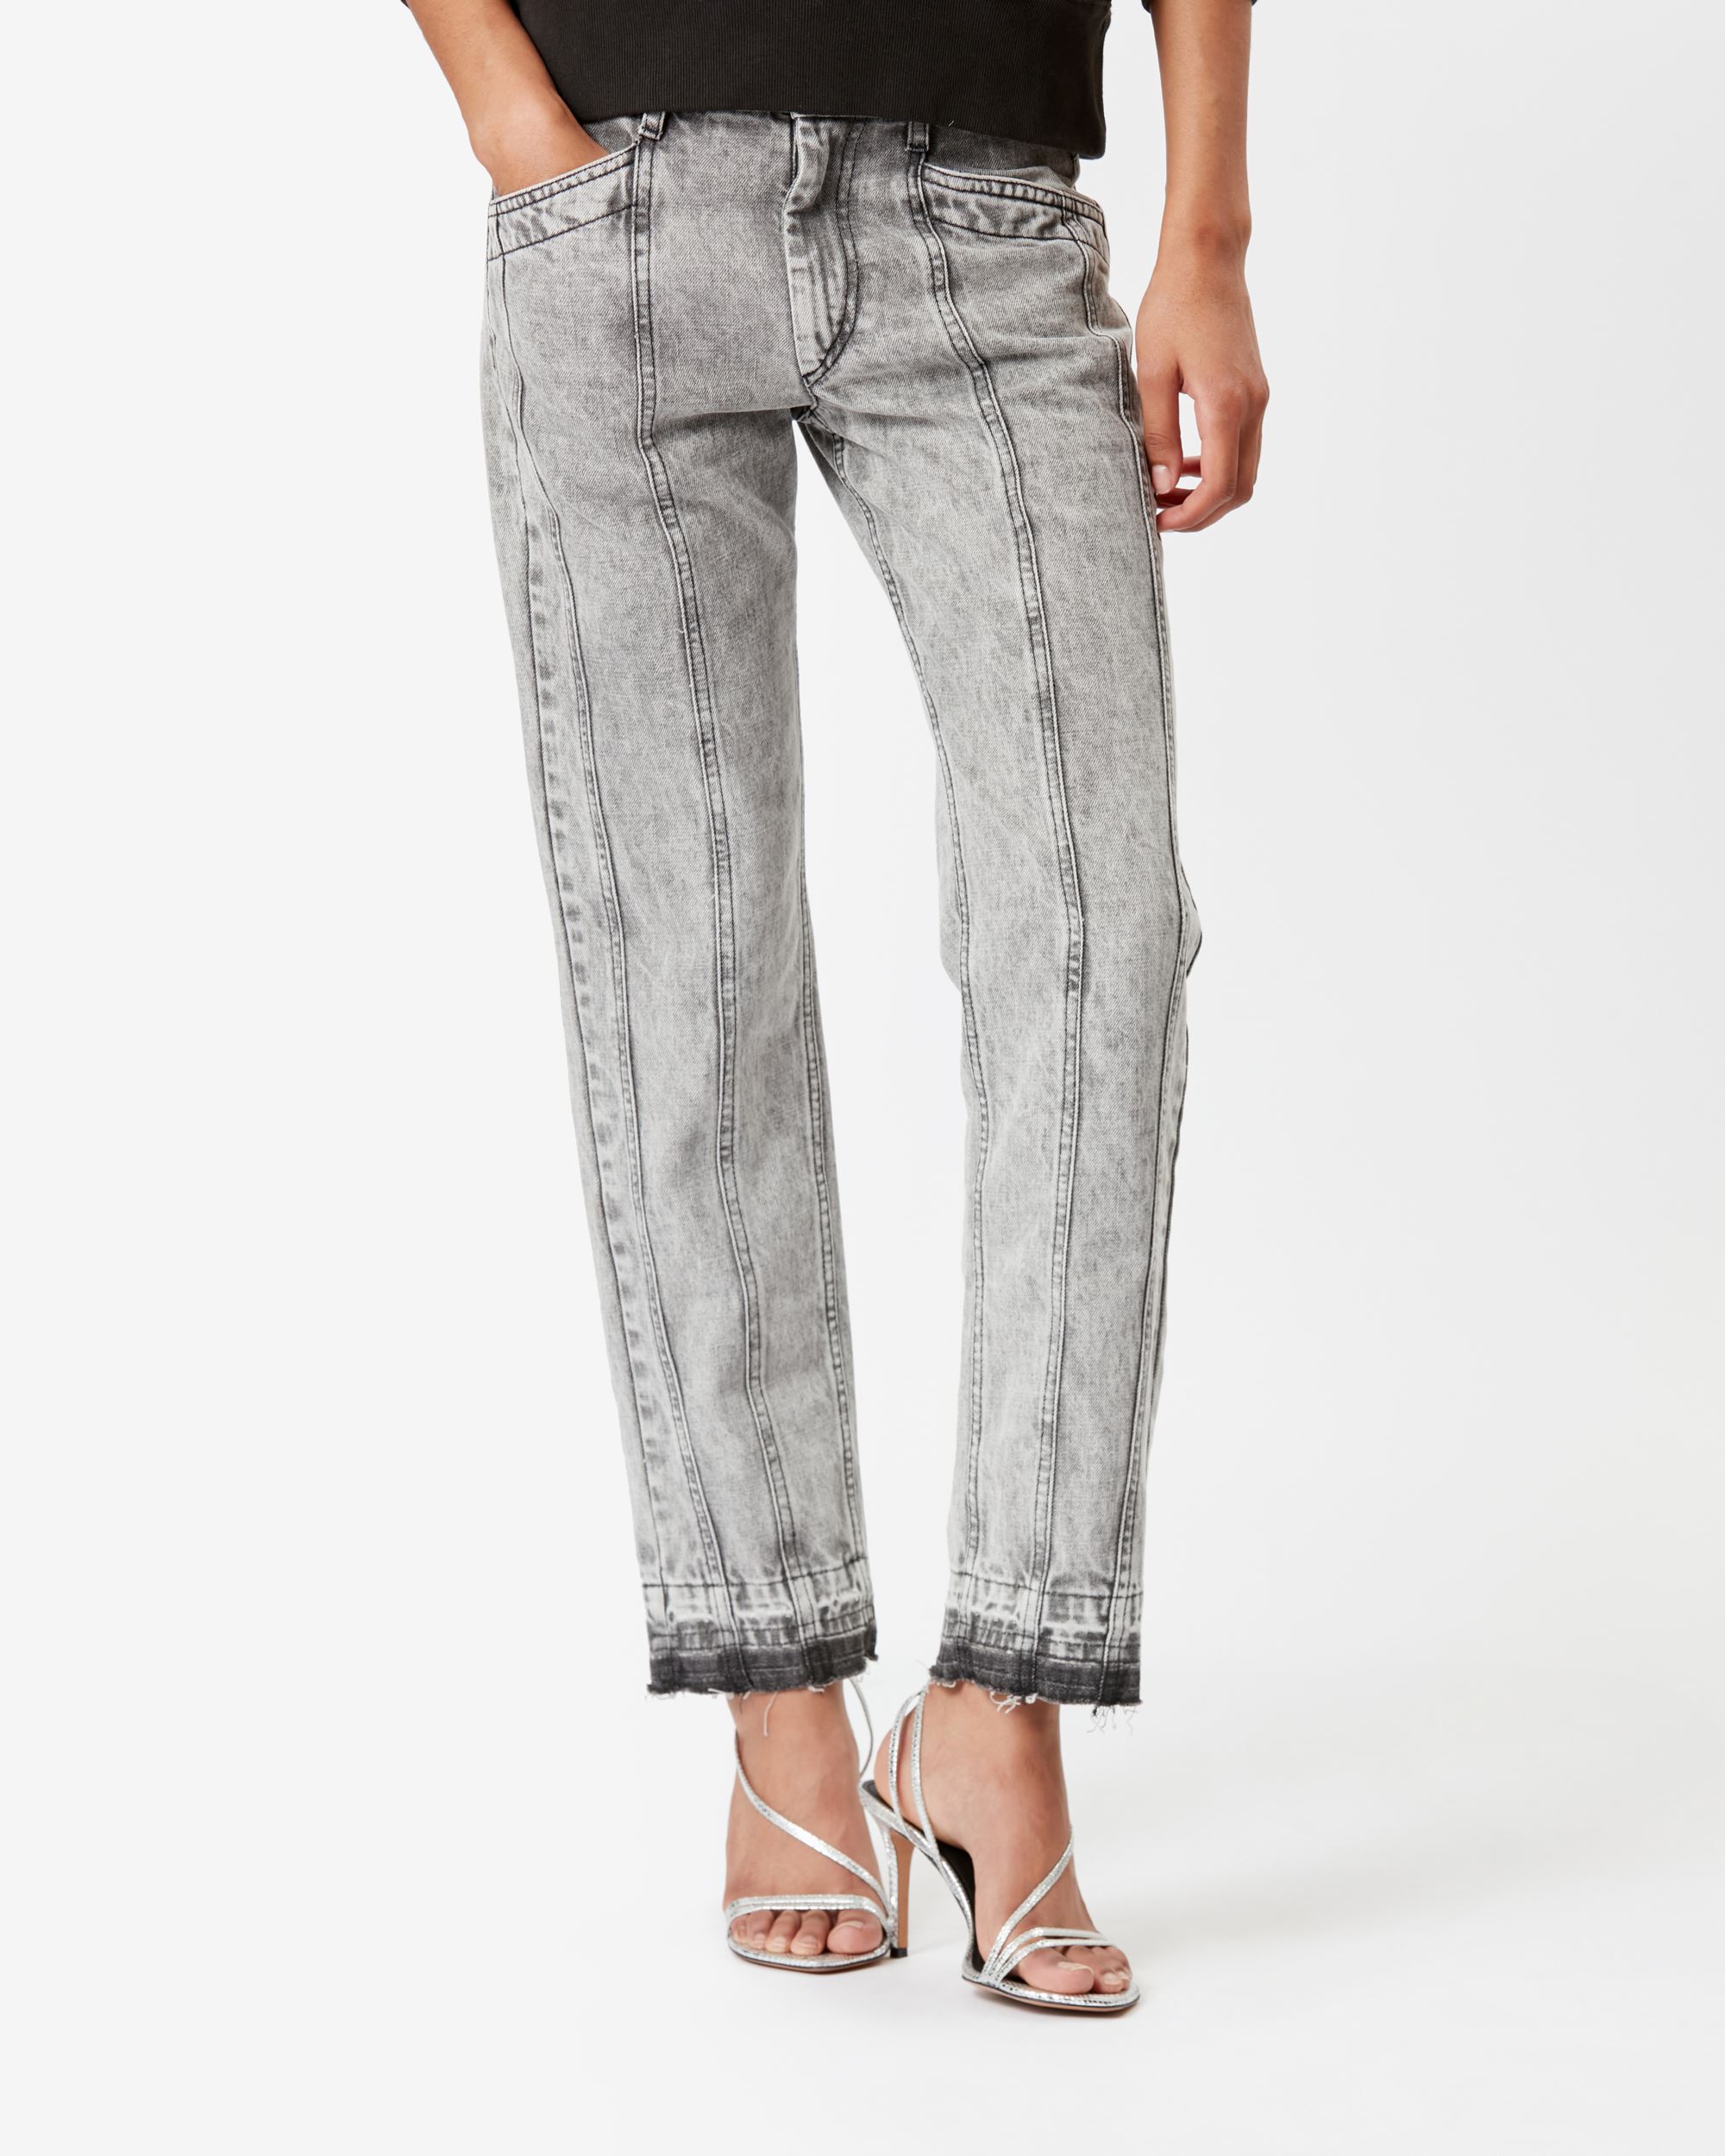 Jeans Suloanoa grey ISABEL MARANT ETOILE, PA0017FA-A1H35E SULANOA, Jeans , Sultana, grey, ISABEL MARANT ETOILE, Lochner Top Fashion